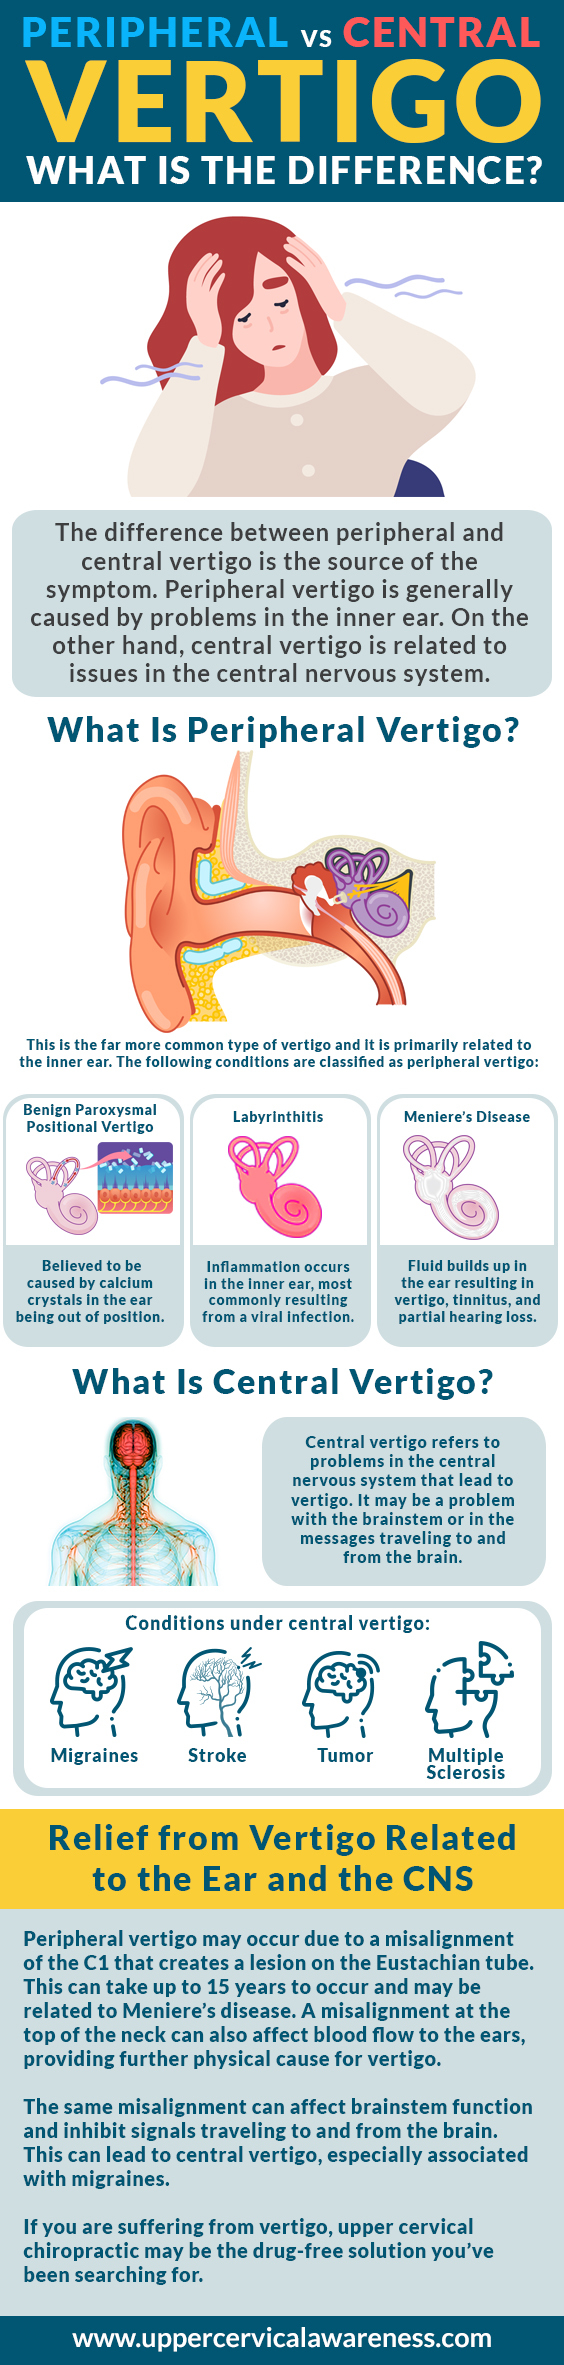 Peripheral Vertigo Vs Central Vertigo - What Is the Difference?